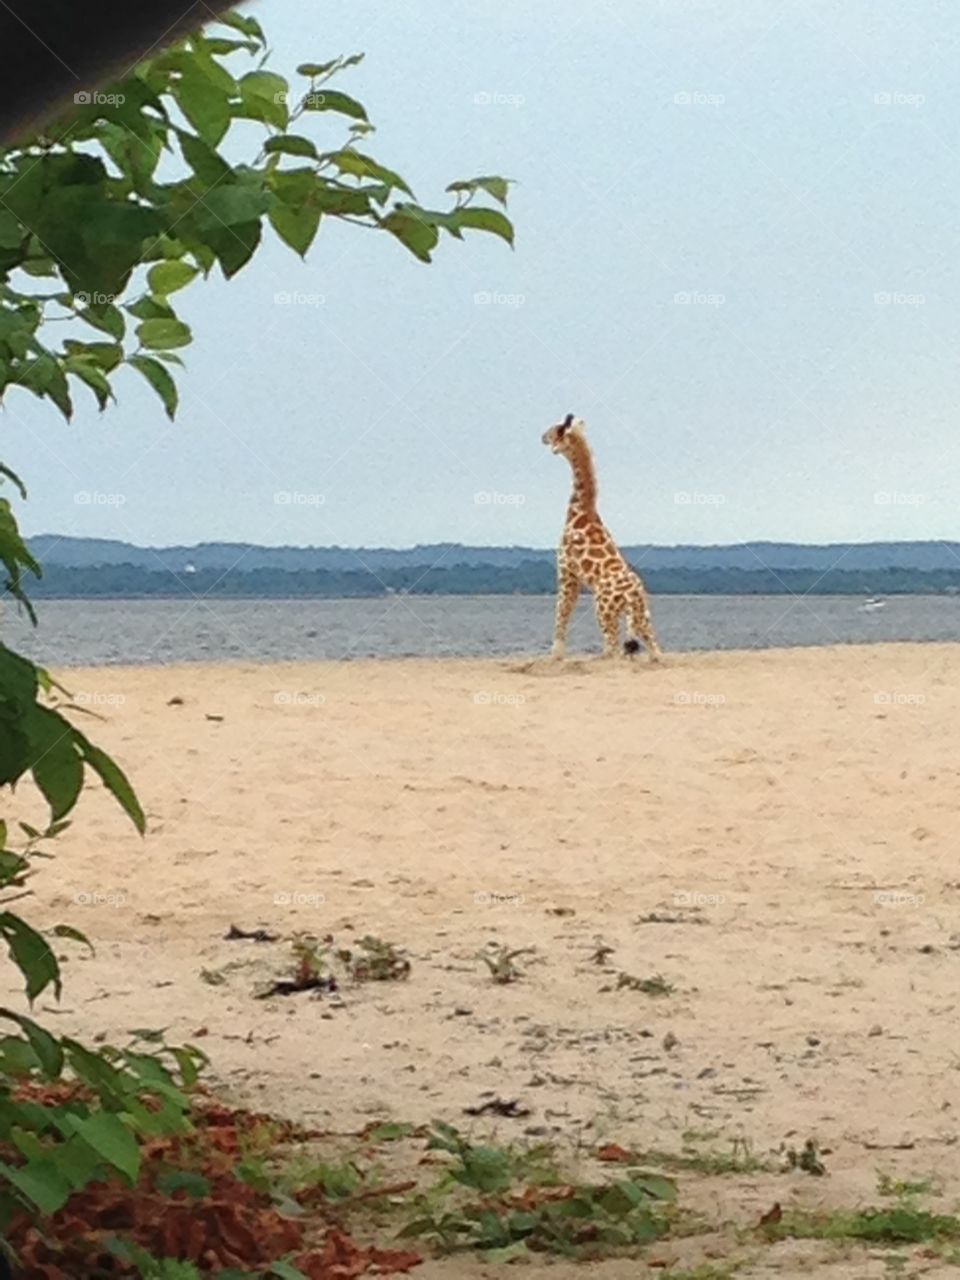 Giraffe on the beach